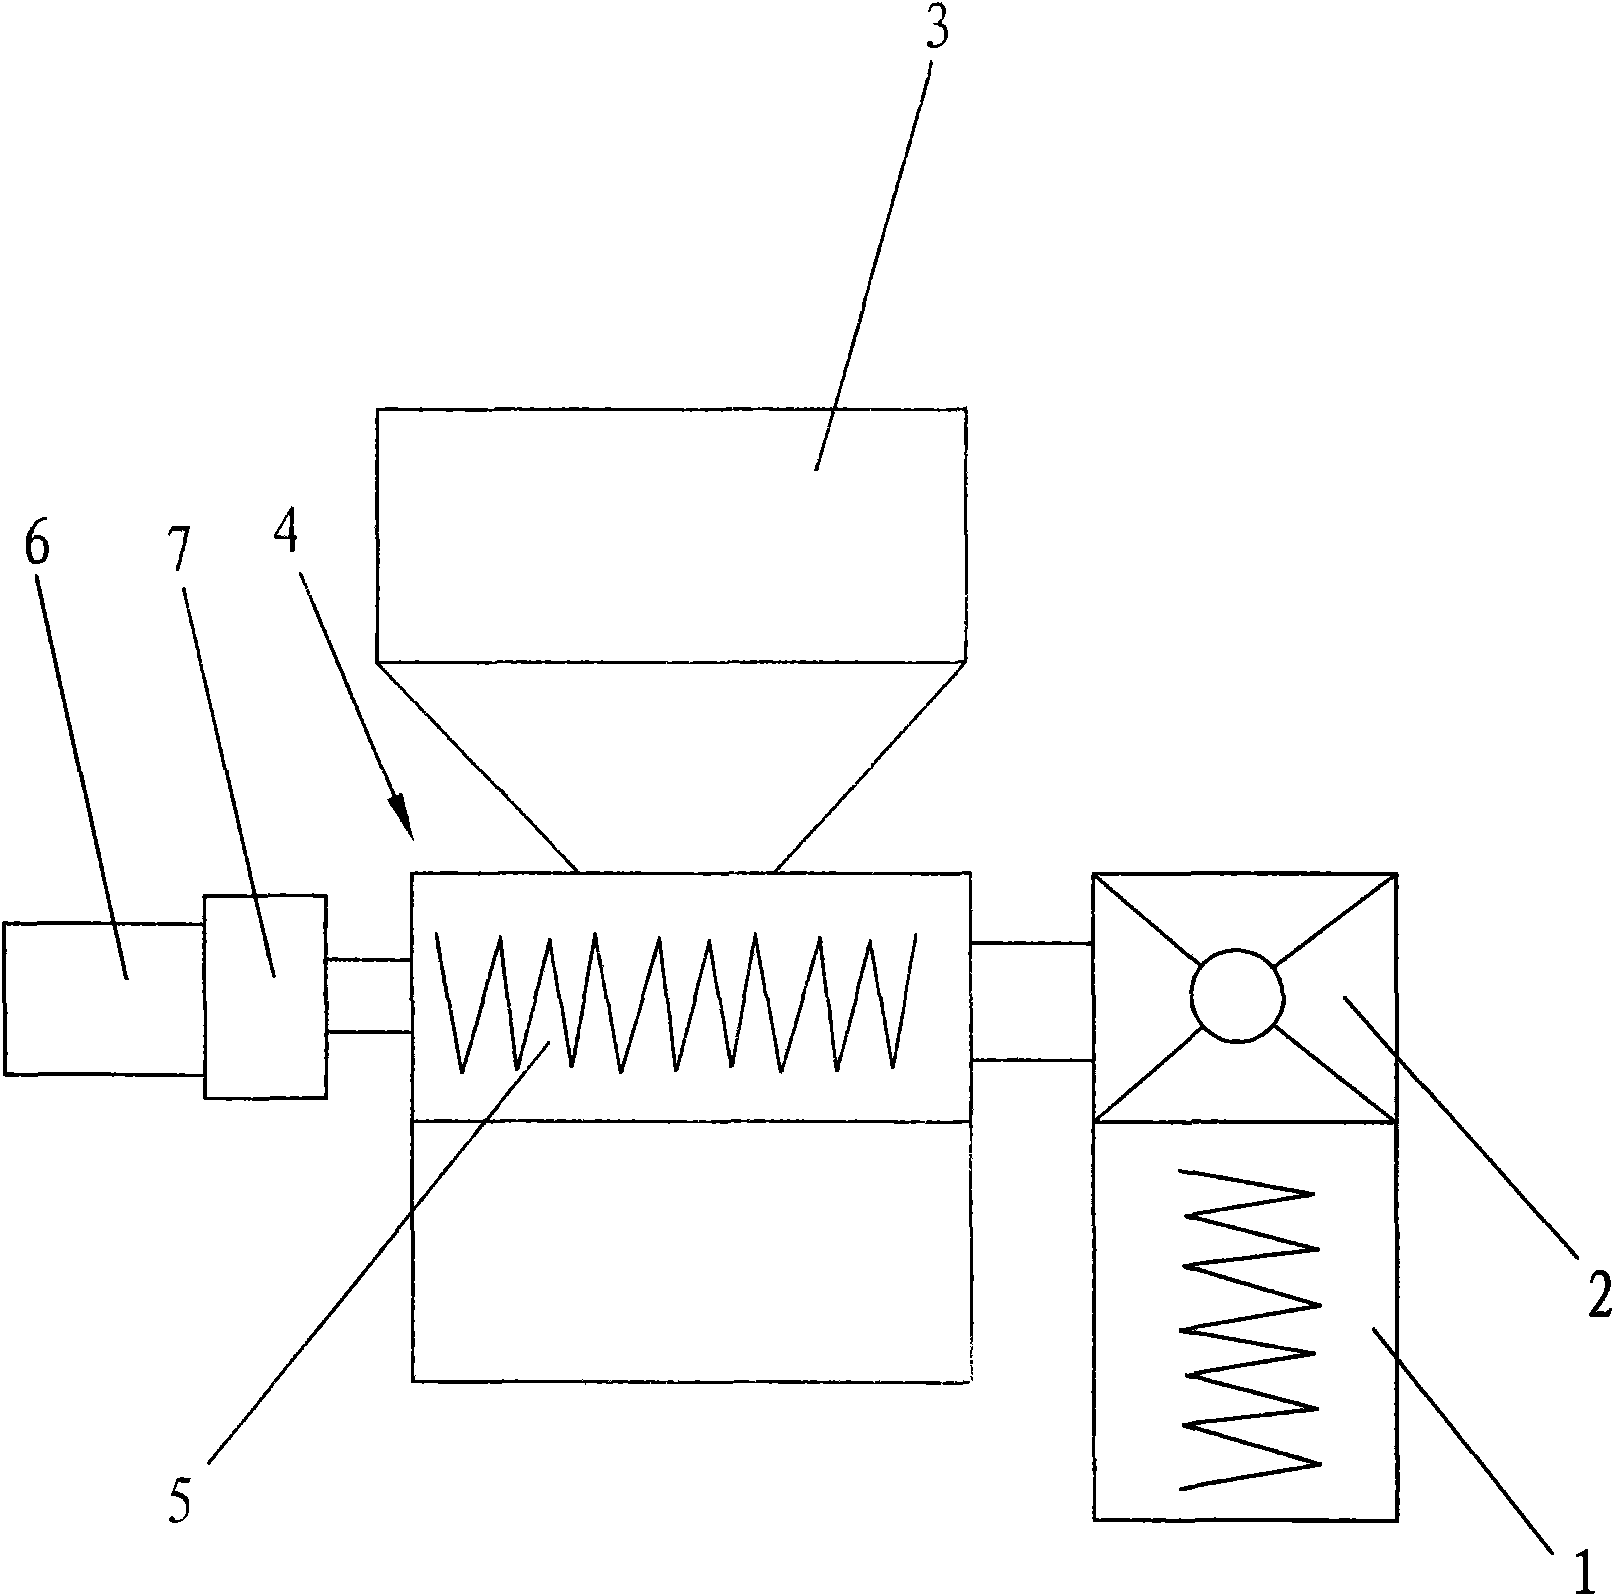 TPU film blowing machine provided with additional feeding machine